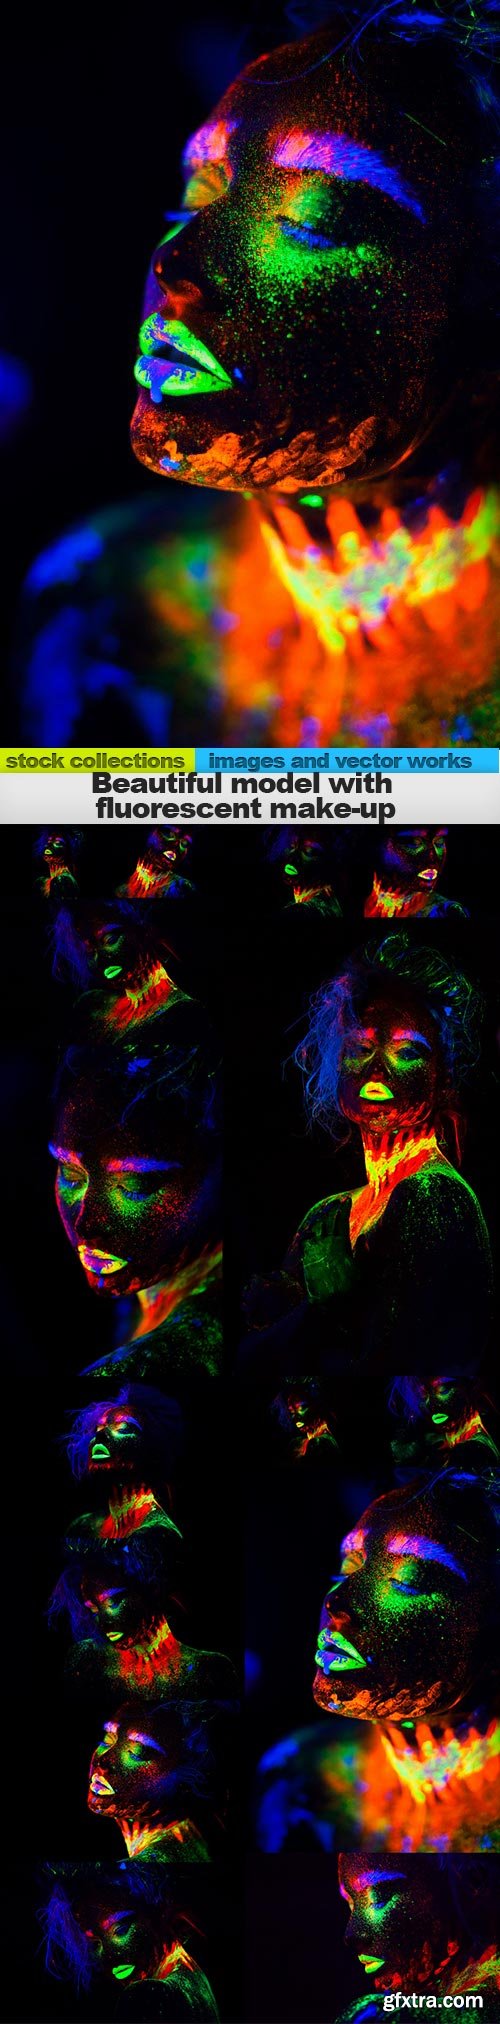 Beautiful model with fluorescent make-up, 15 x UHQ JPEG